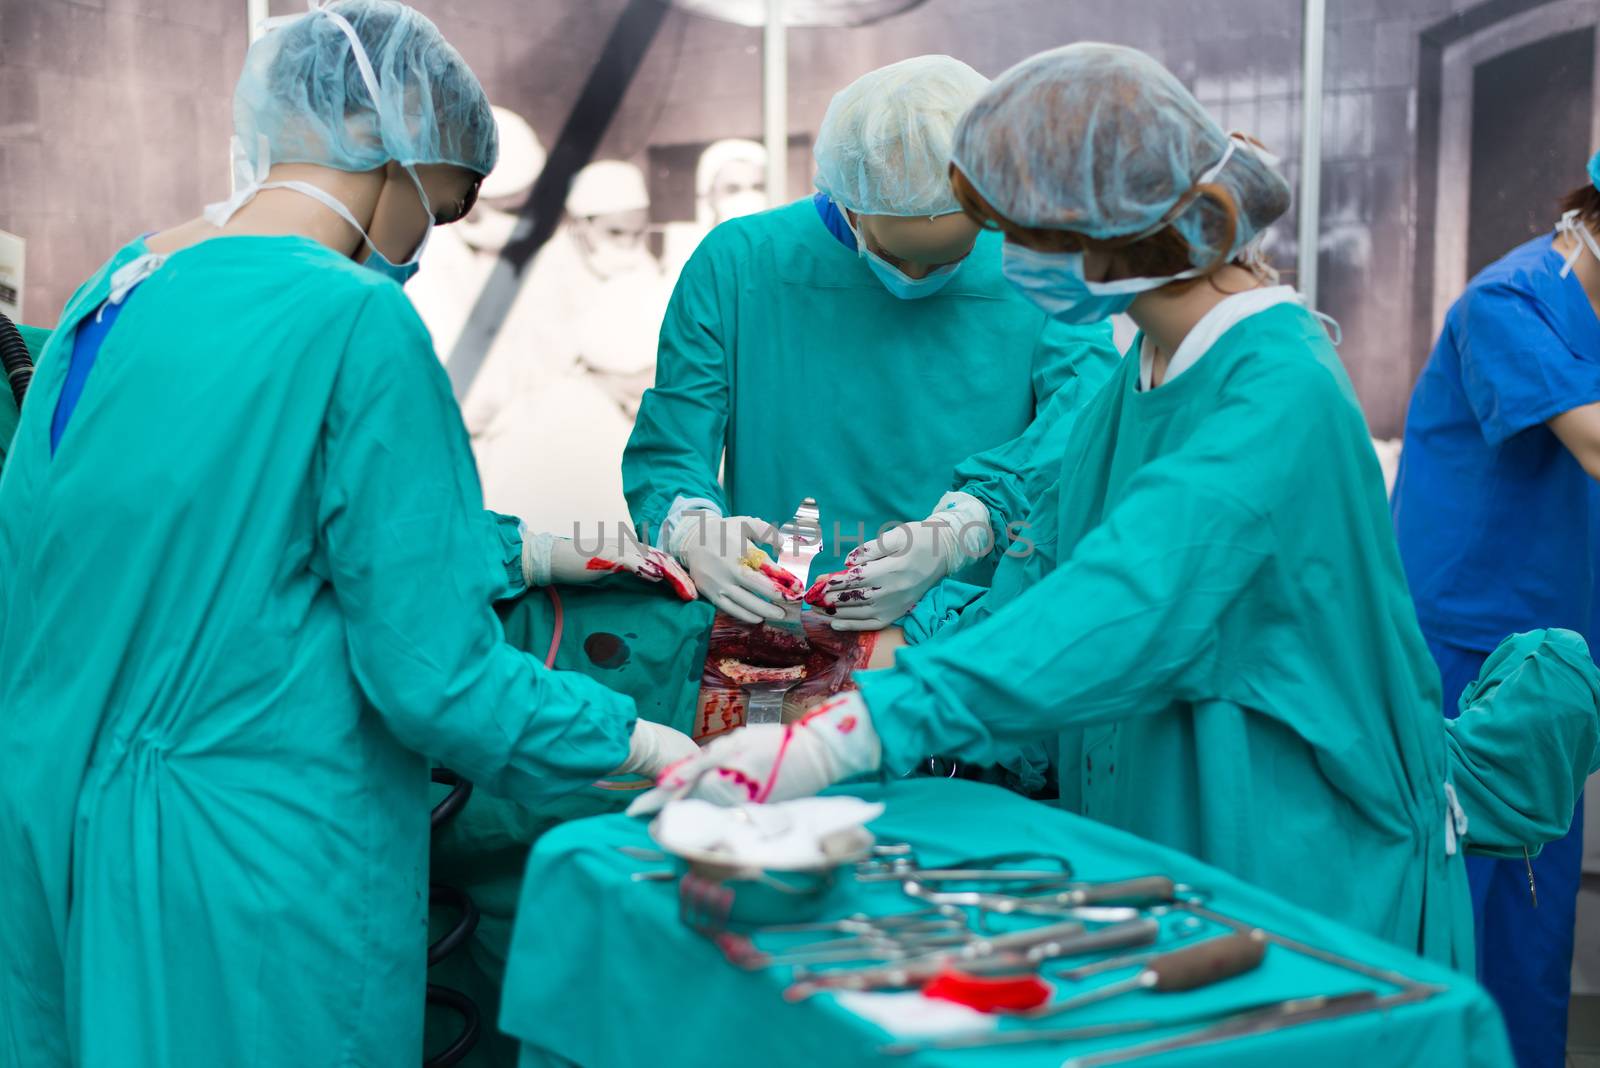 Surgeons at work by furzyk73